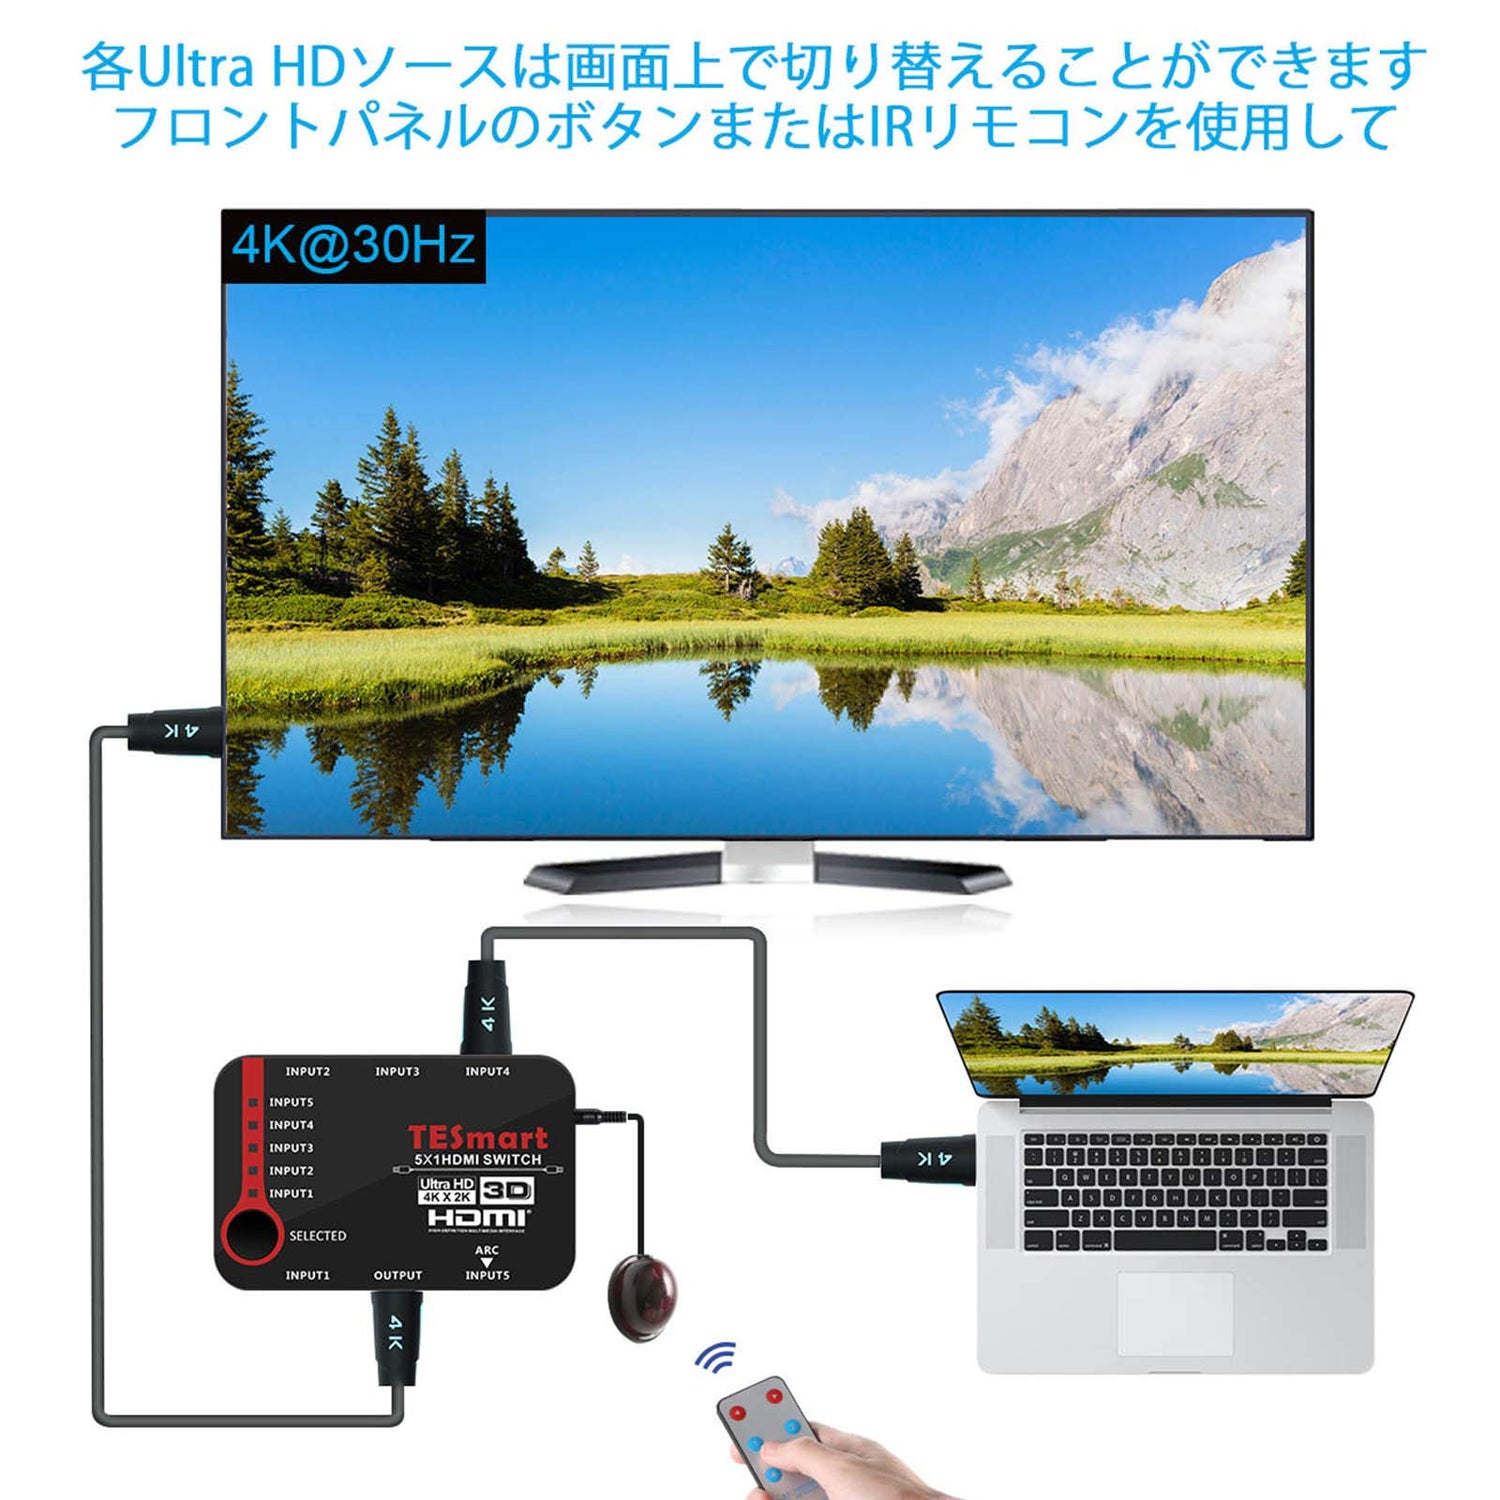 HDMI切替器 5入力1出力 4K30Hz HDCP ARC対応 HDTV ゲーム機など